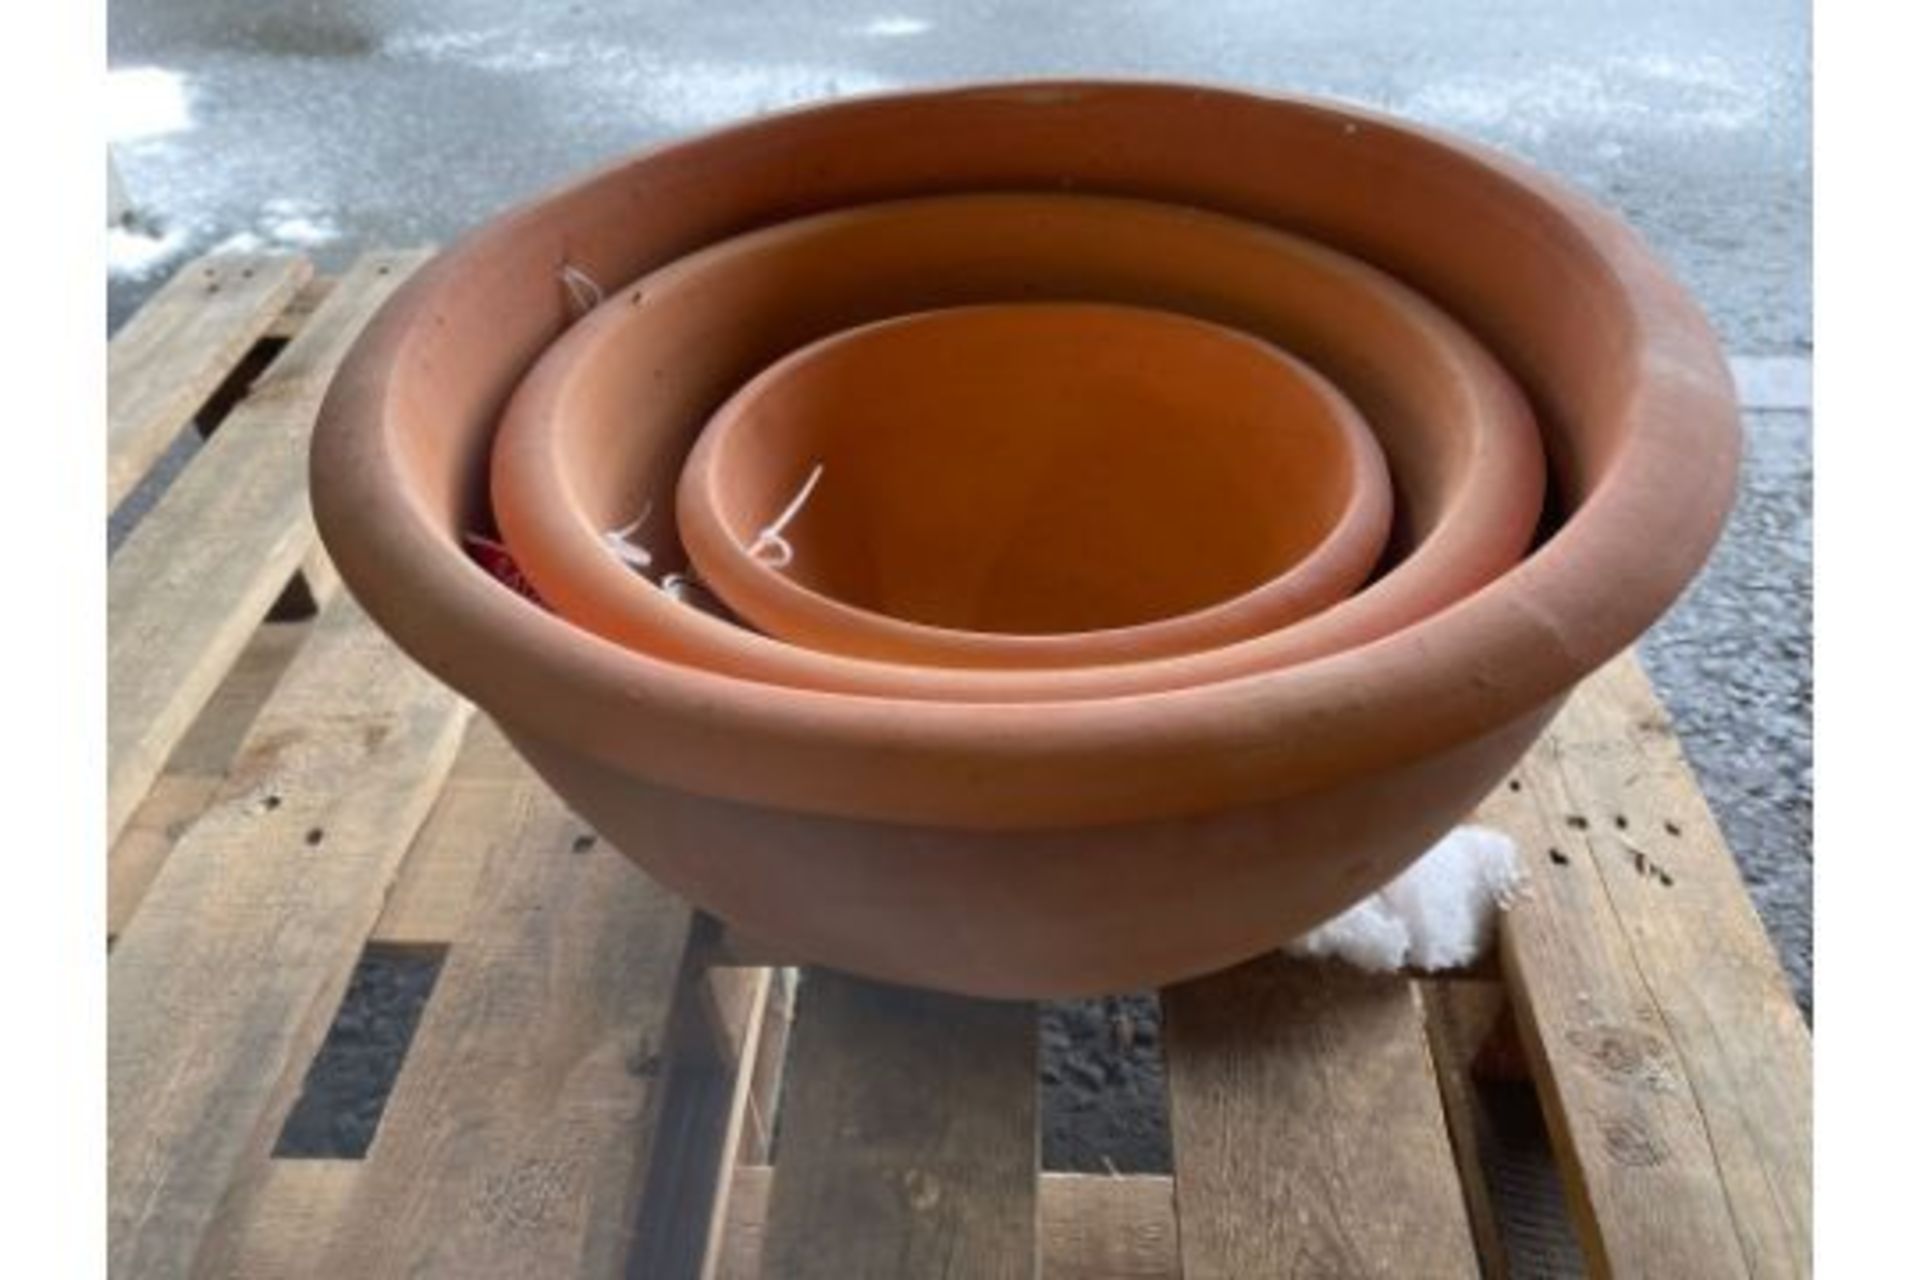 RRP £120 PLUS - X3 New Terracota Pots, 1 Large, 1 Medium & 1 Small. Frost Proof Guaranteed. - Image 2 of 3